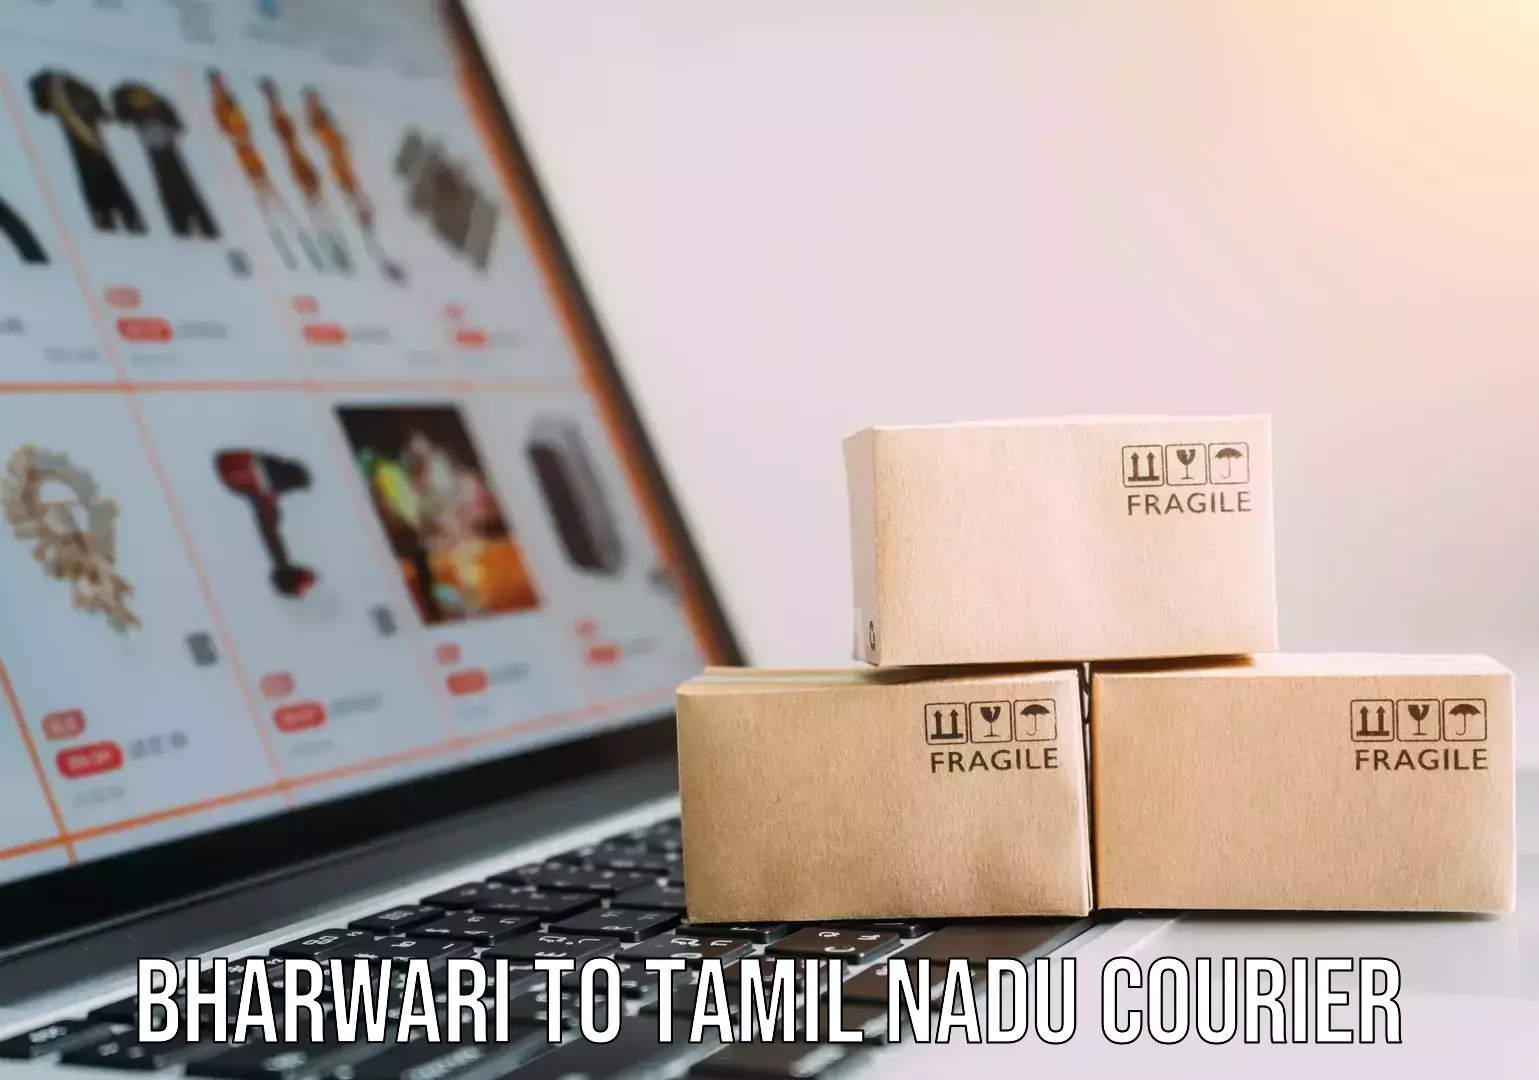 Courier app Bharwari to Tamil Nadu